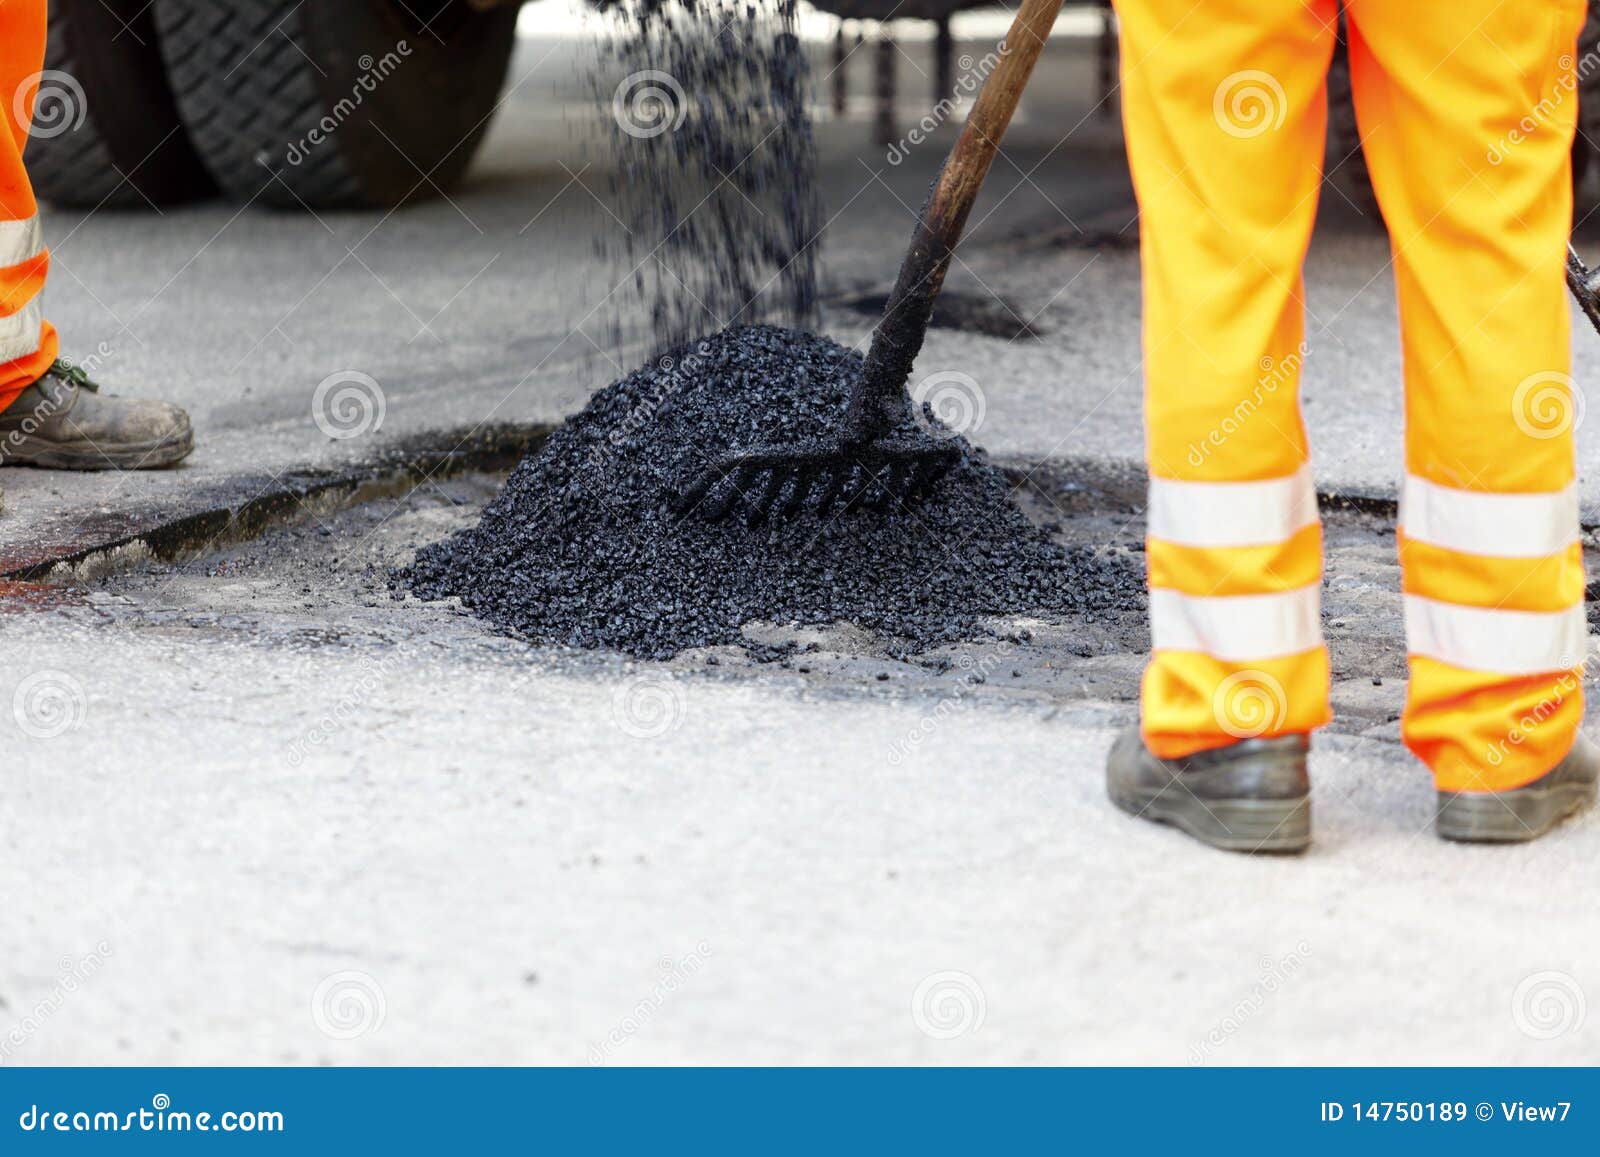 pothole asphalt repair